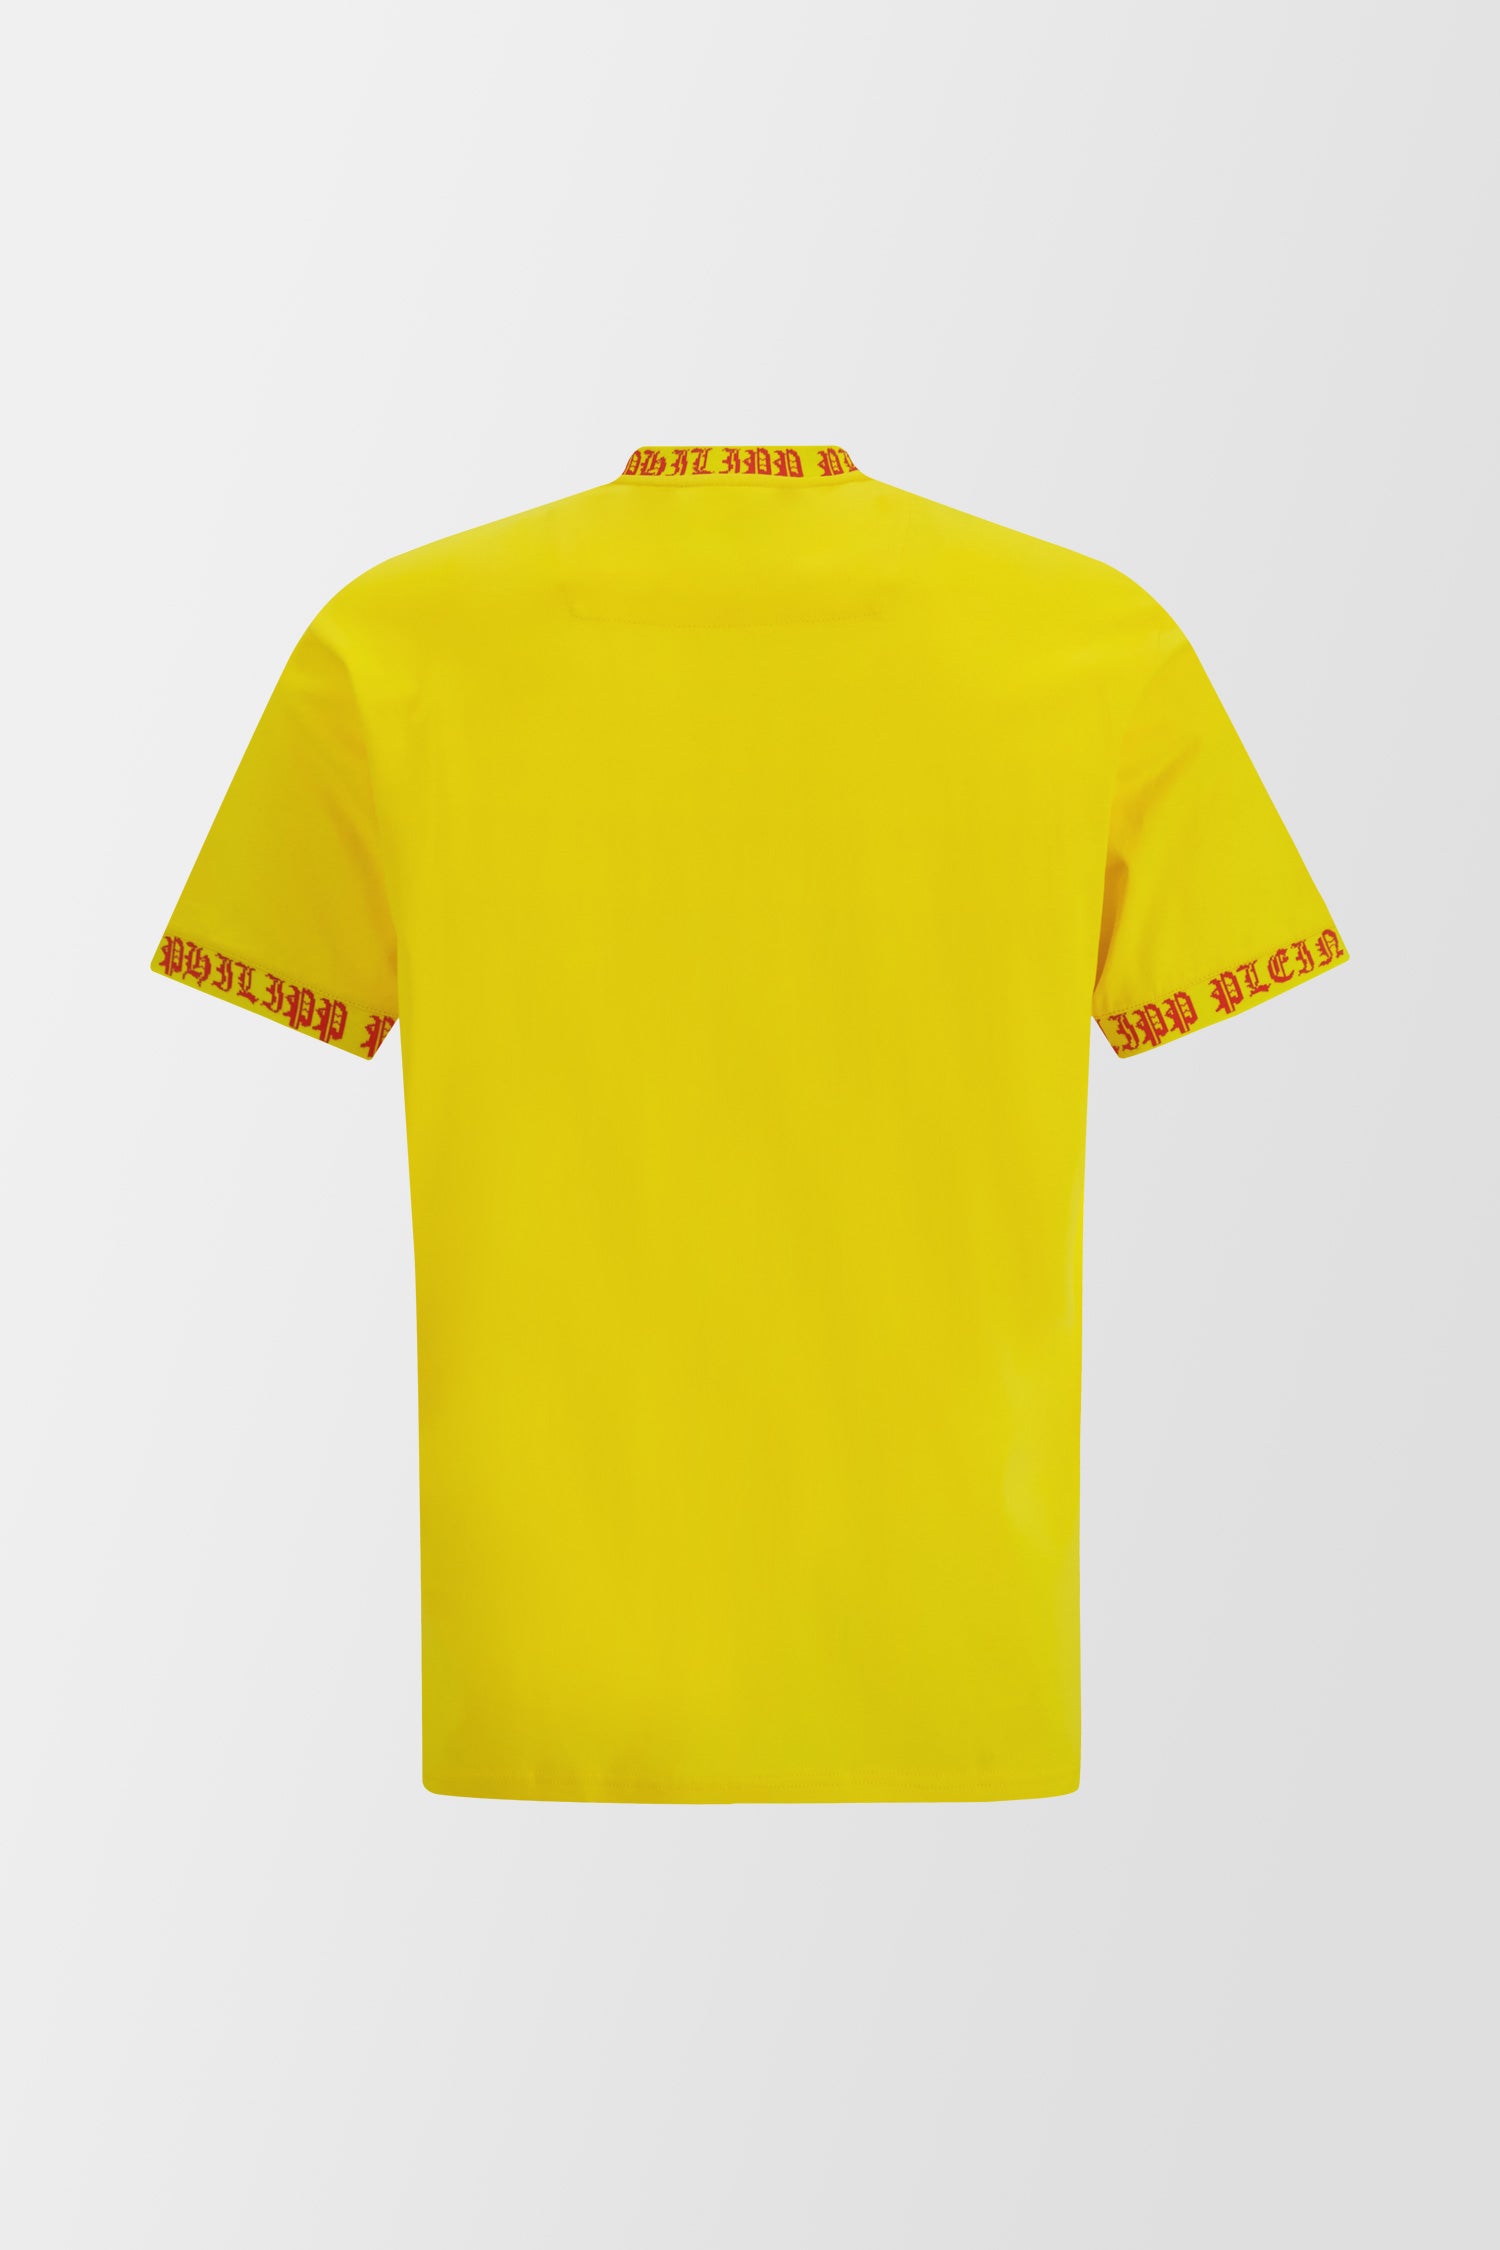 Philipp Plein Yellow Round Neck T-Shirt